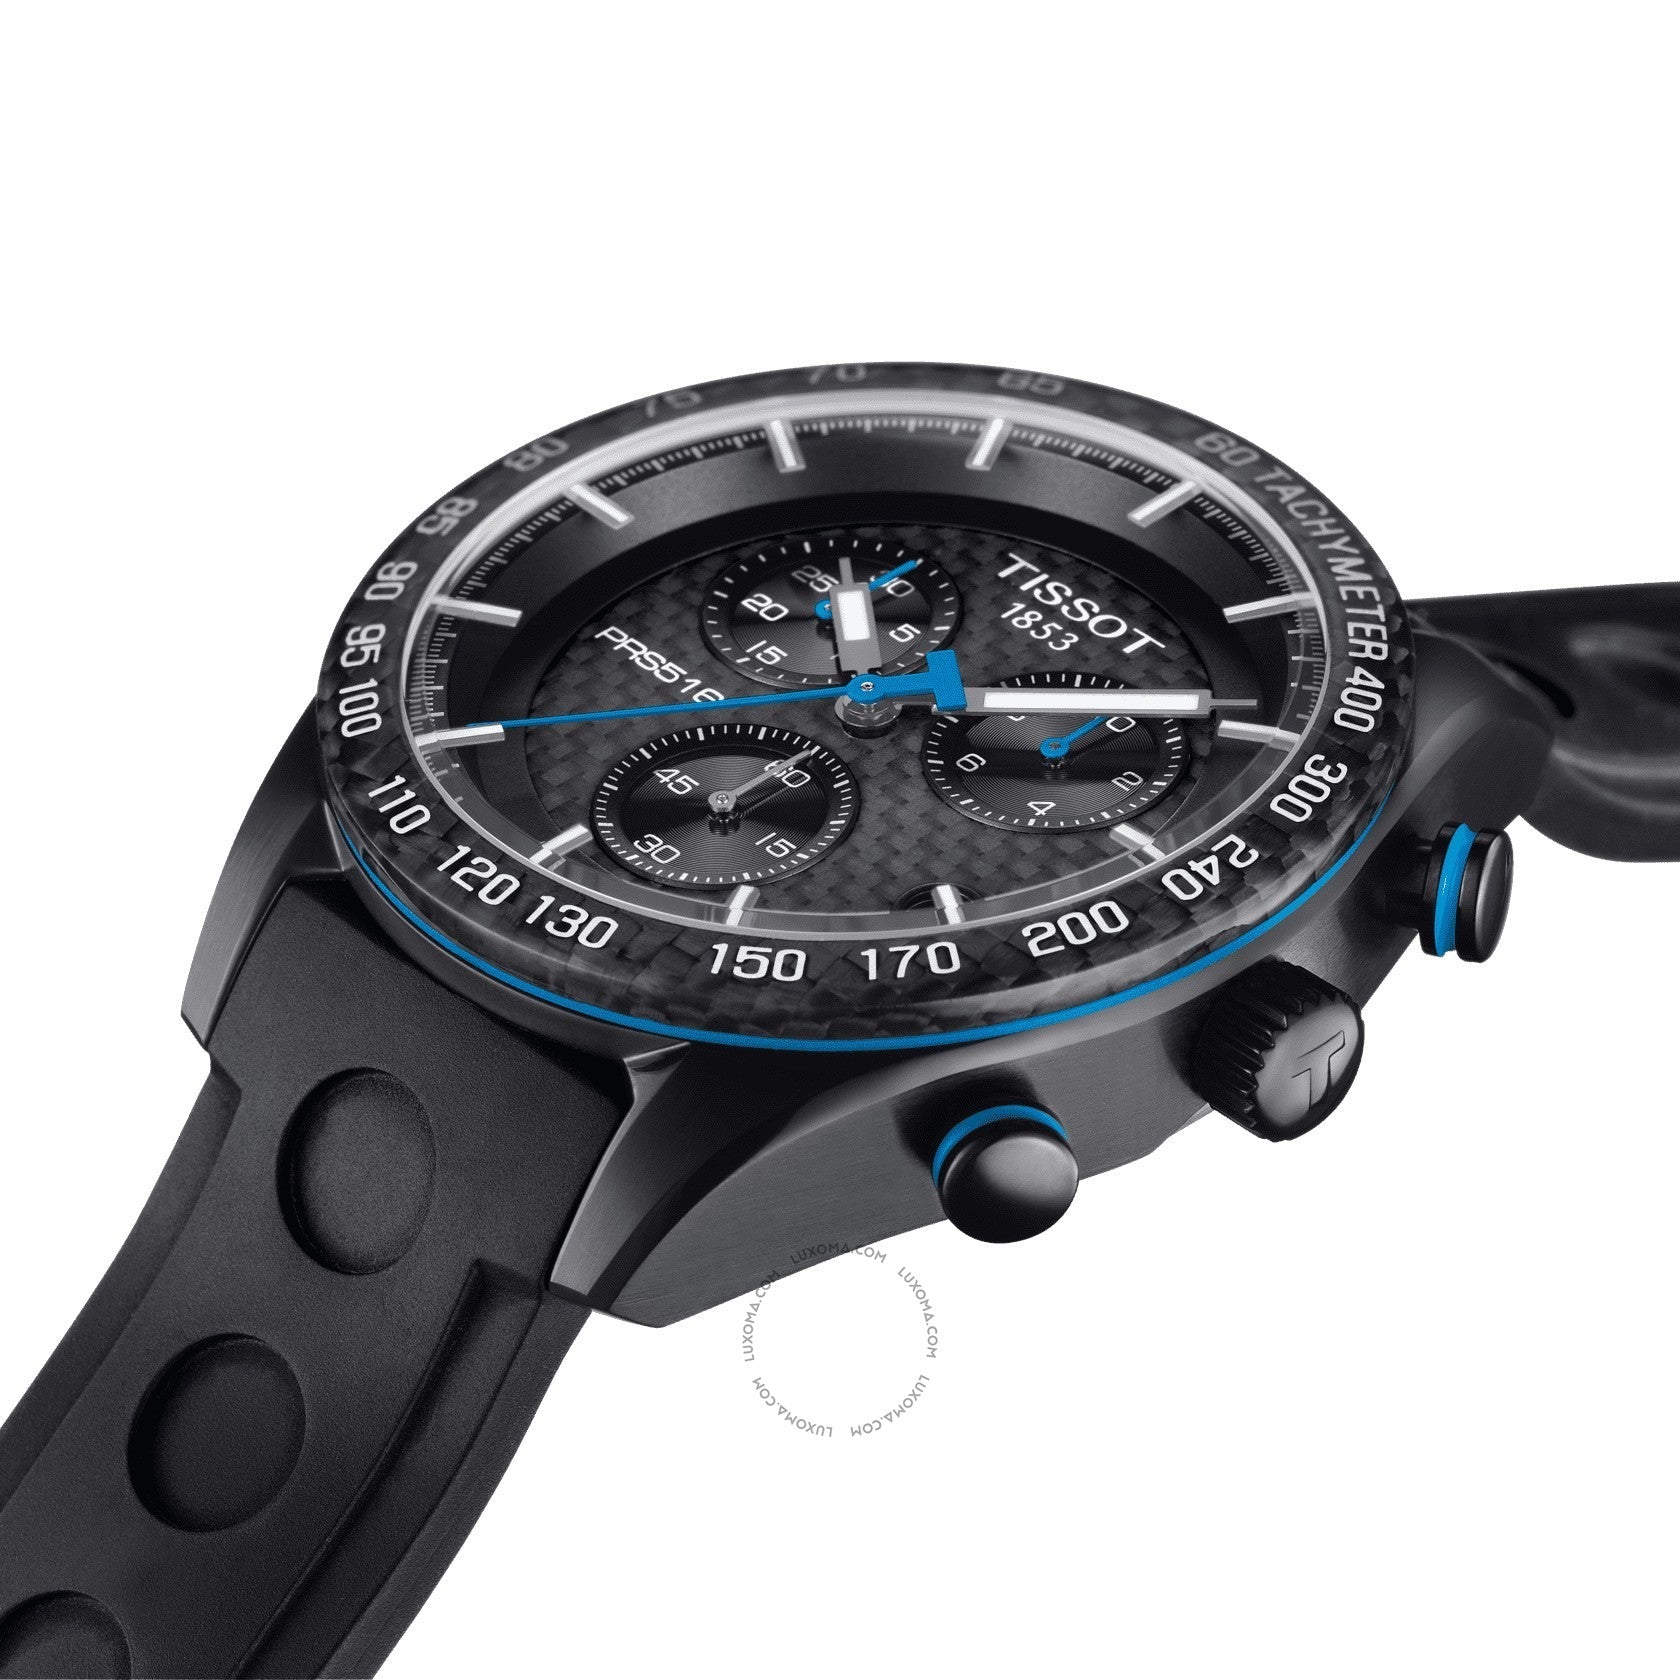 Tissot Tissot PRS 516 Chronograph Black Carbon Dial Men's Watch T100.417.37.201.00